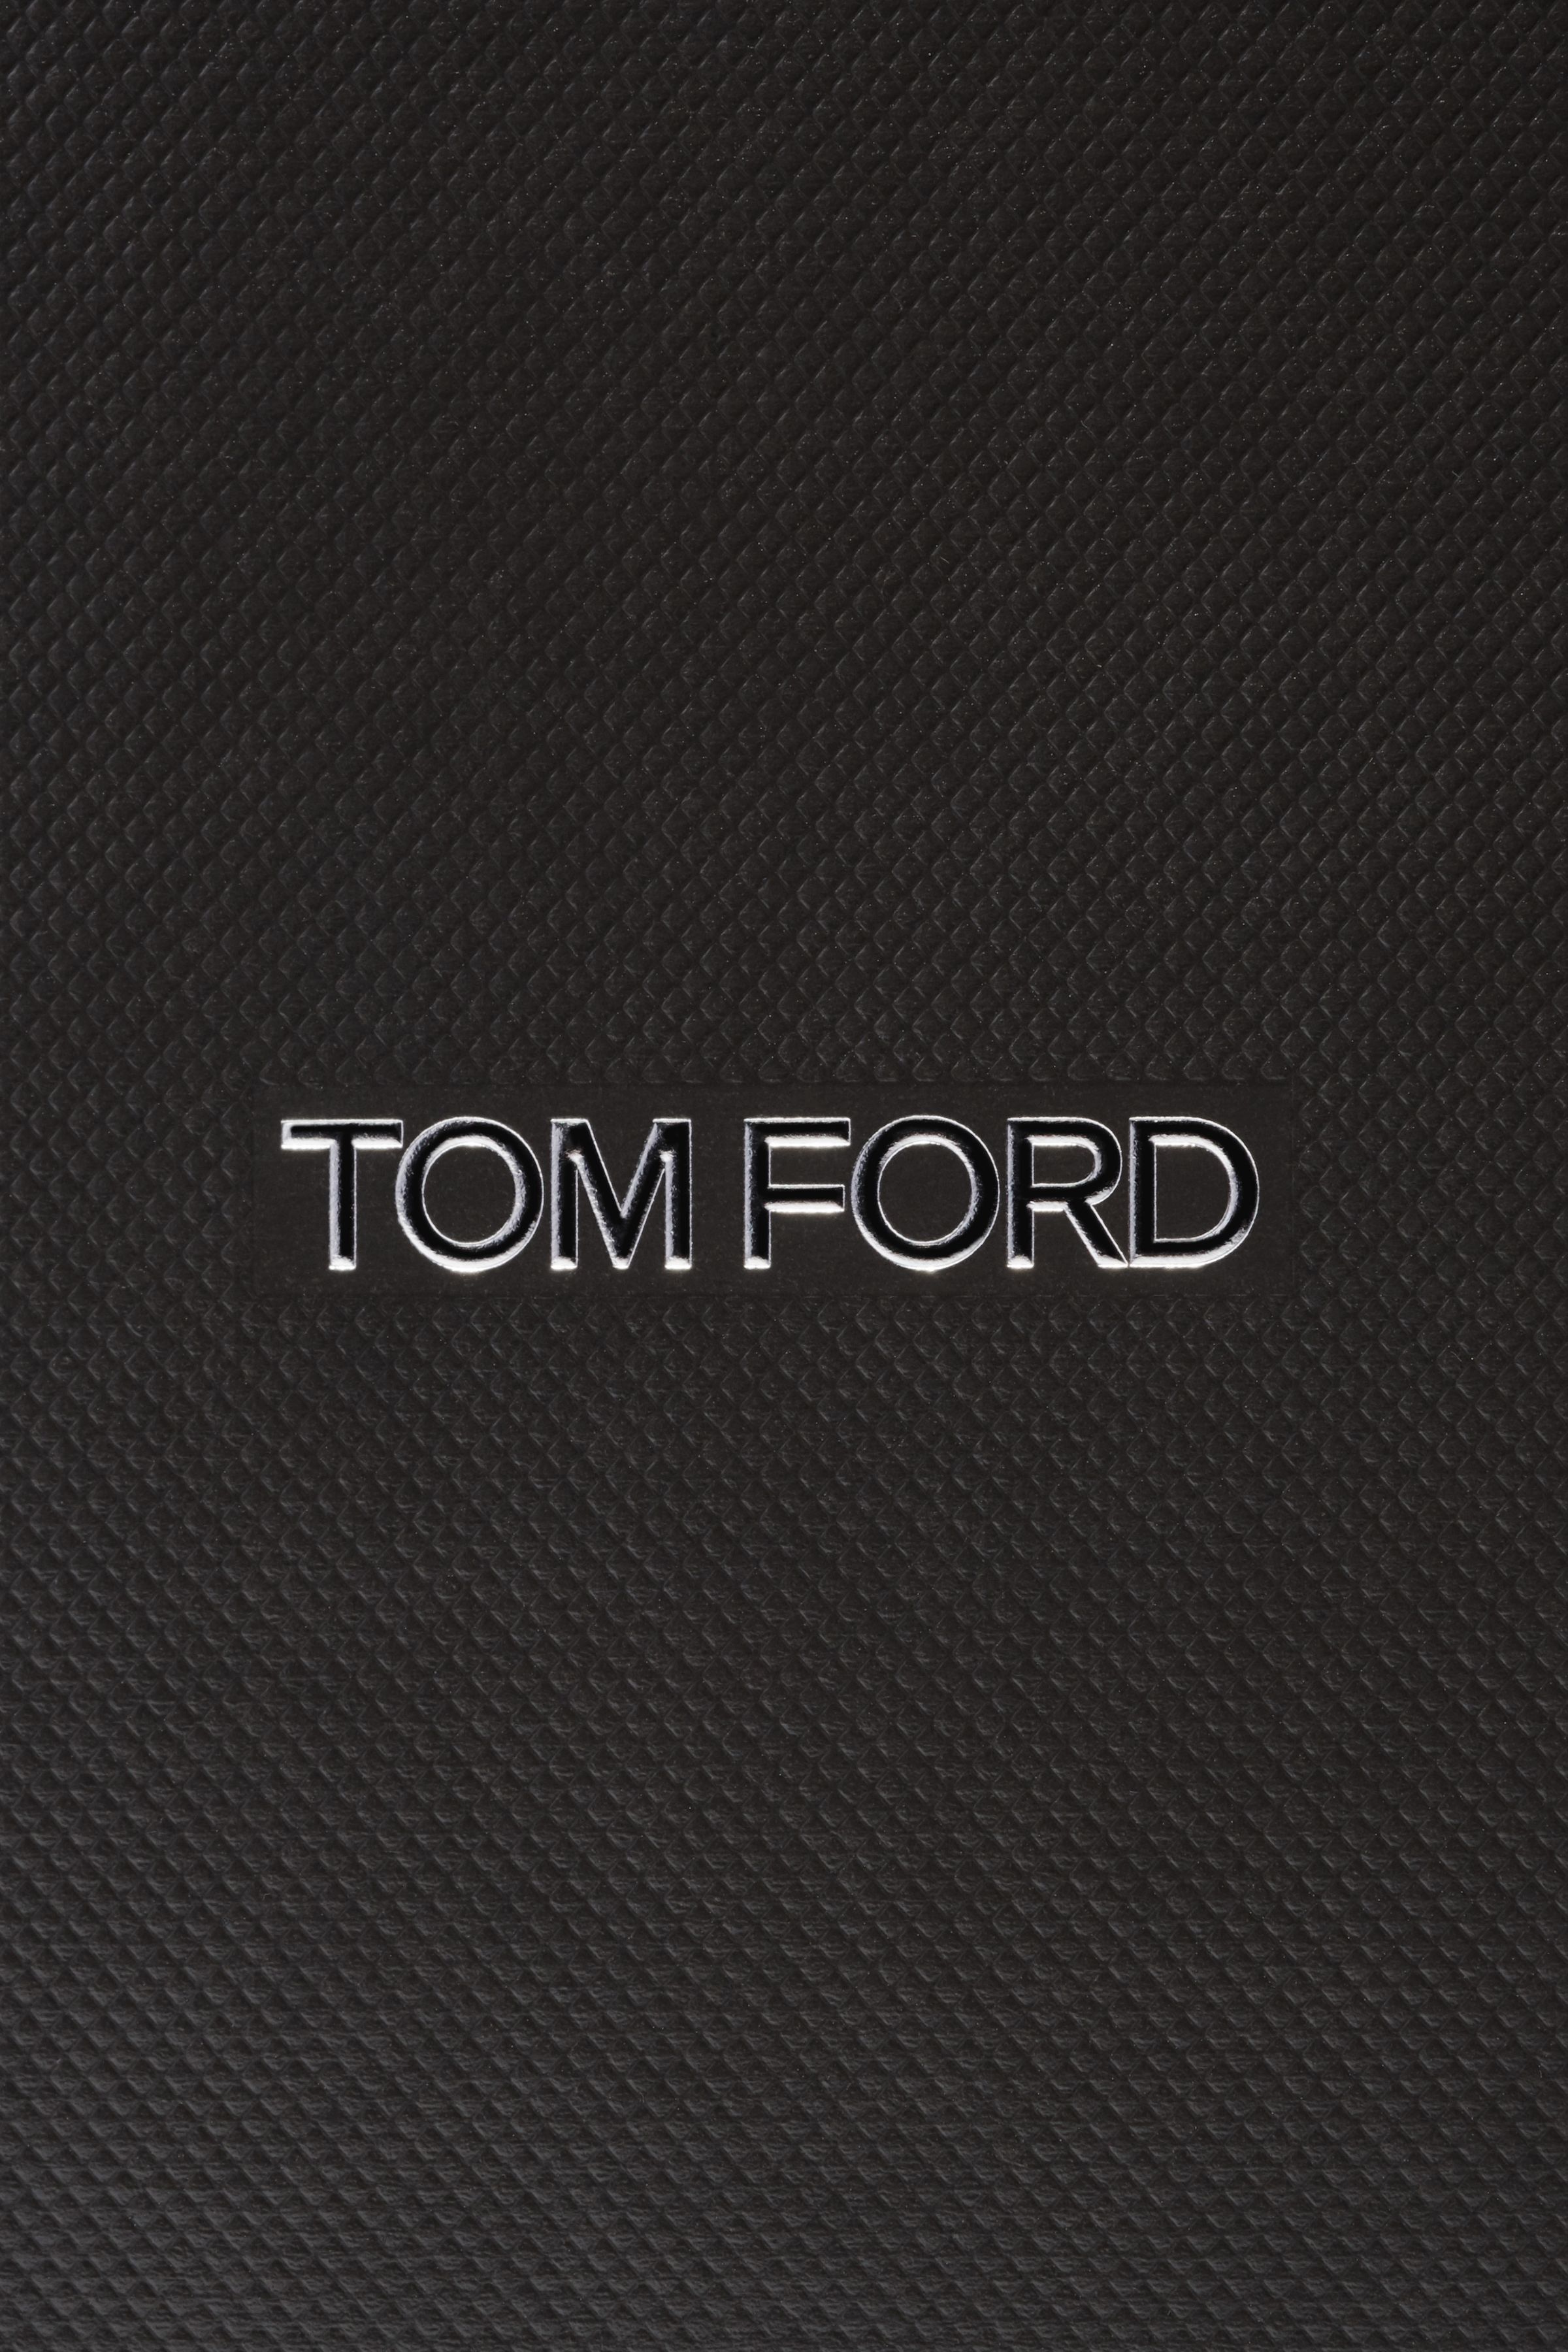 Tom Ford Beauty gift packaging logo detail